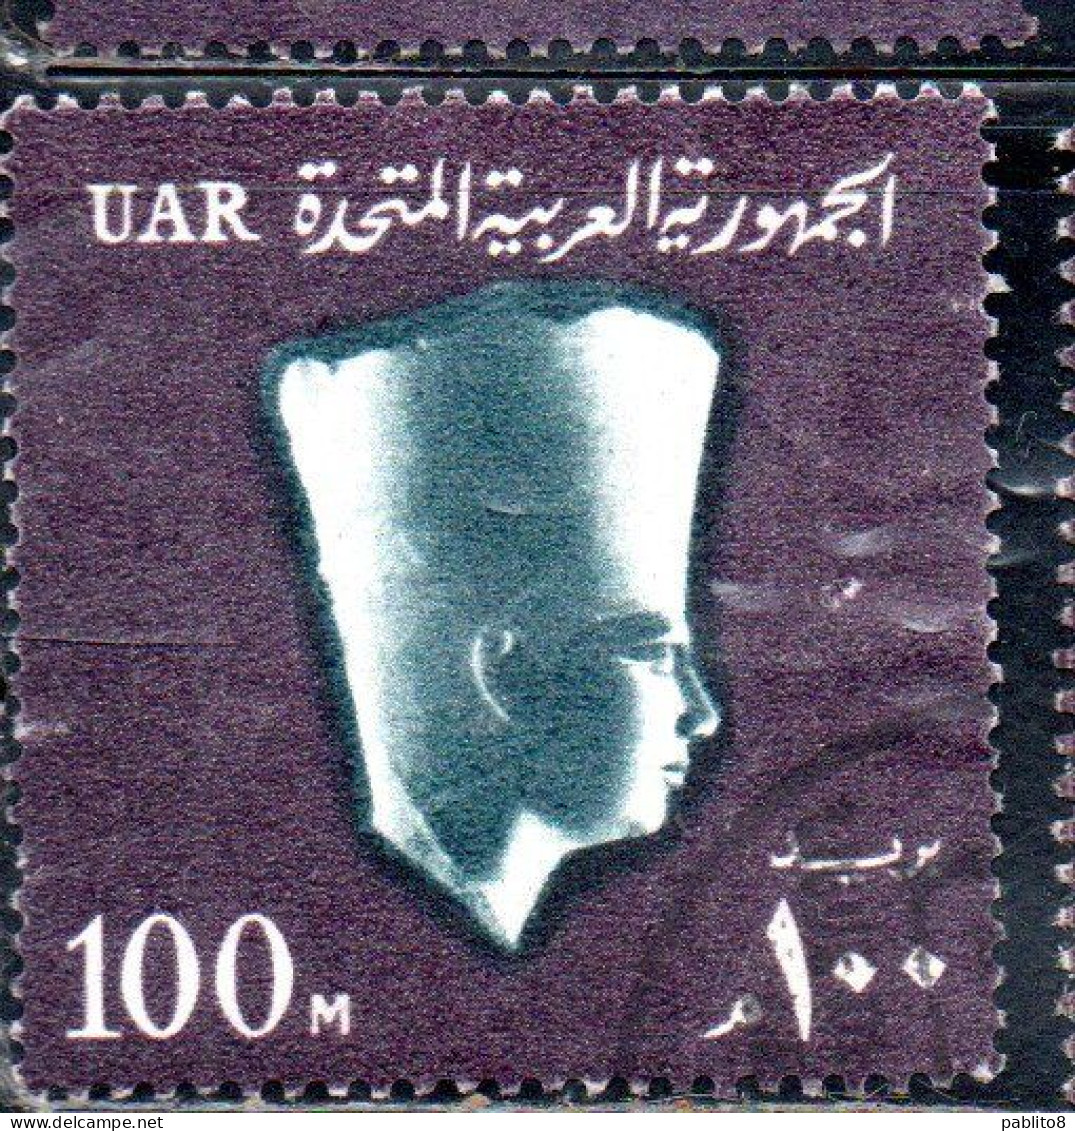 UAR EGYPT EGITTO 1964 1967 PHARAOH USERKAF 5th DYNASTY 100m USED USATO OBLITERE' - Oblitérés